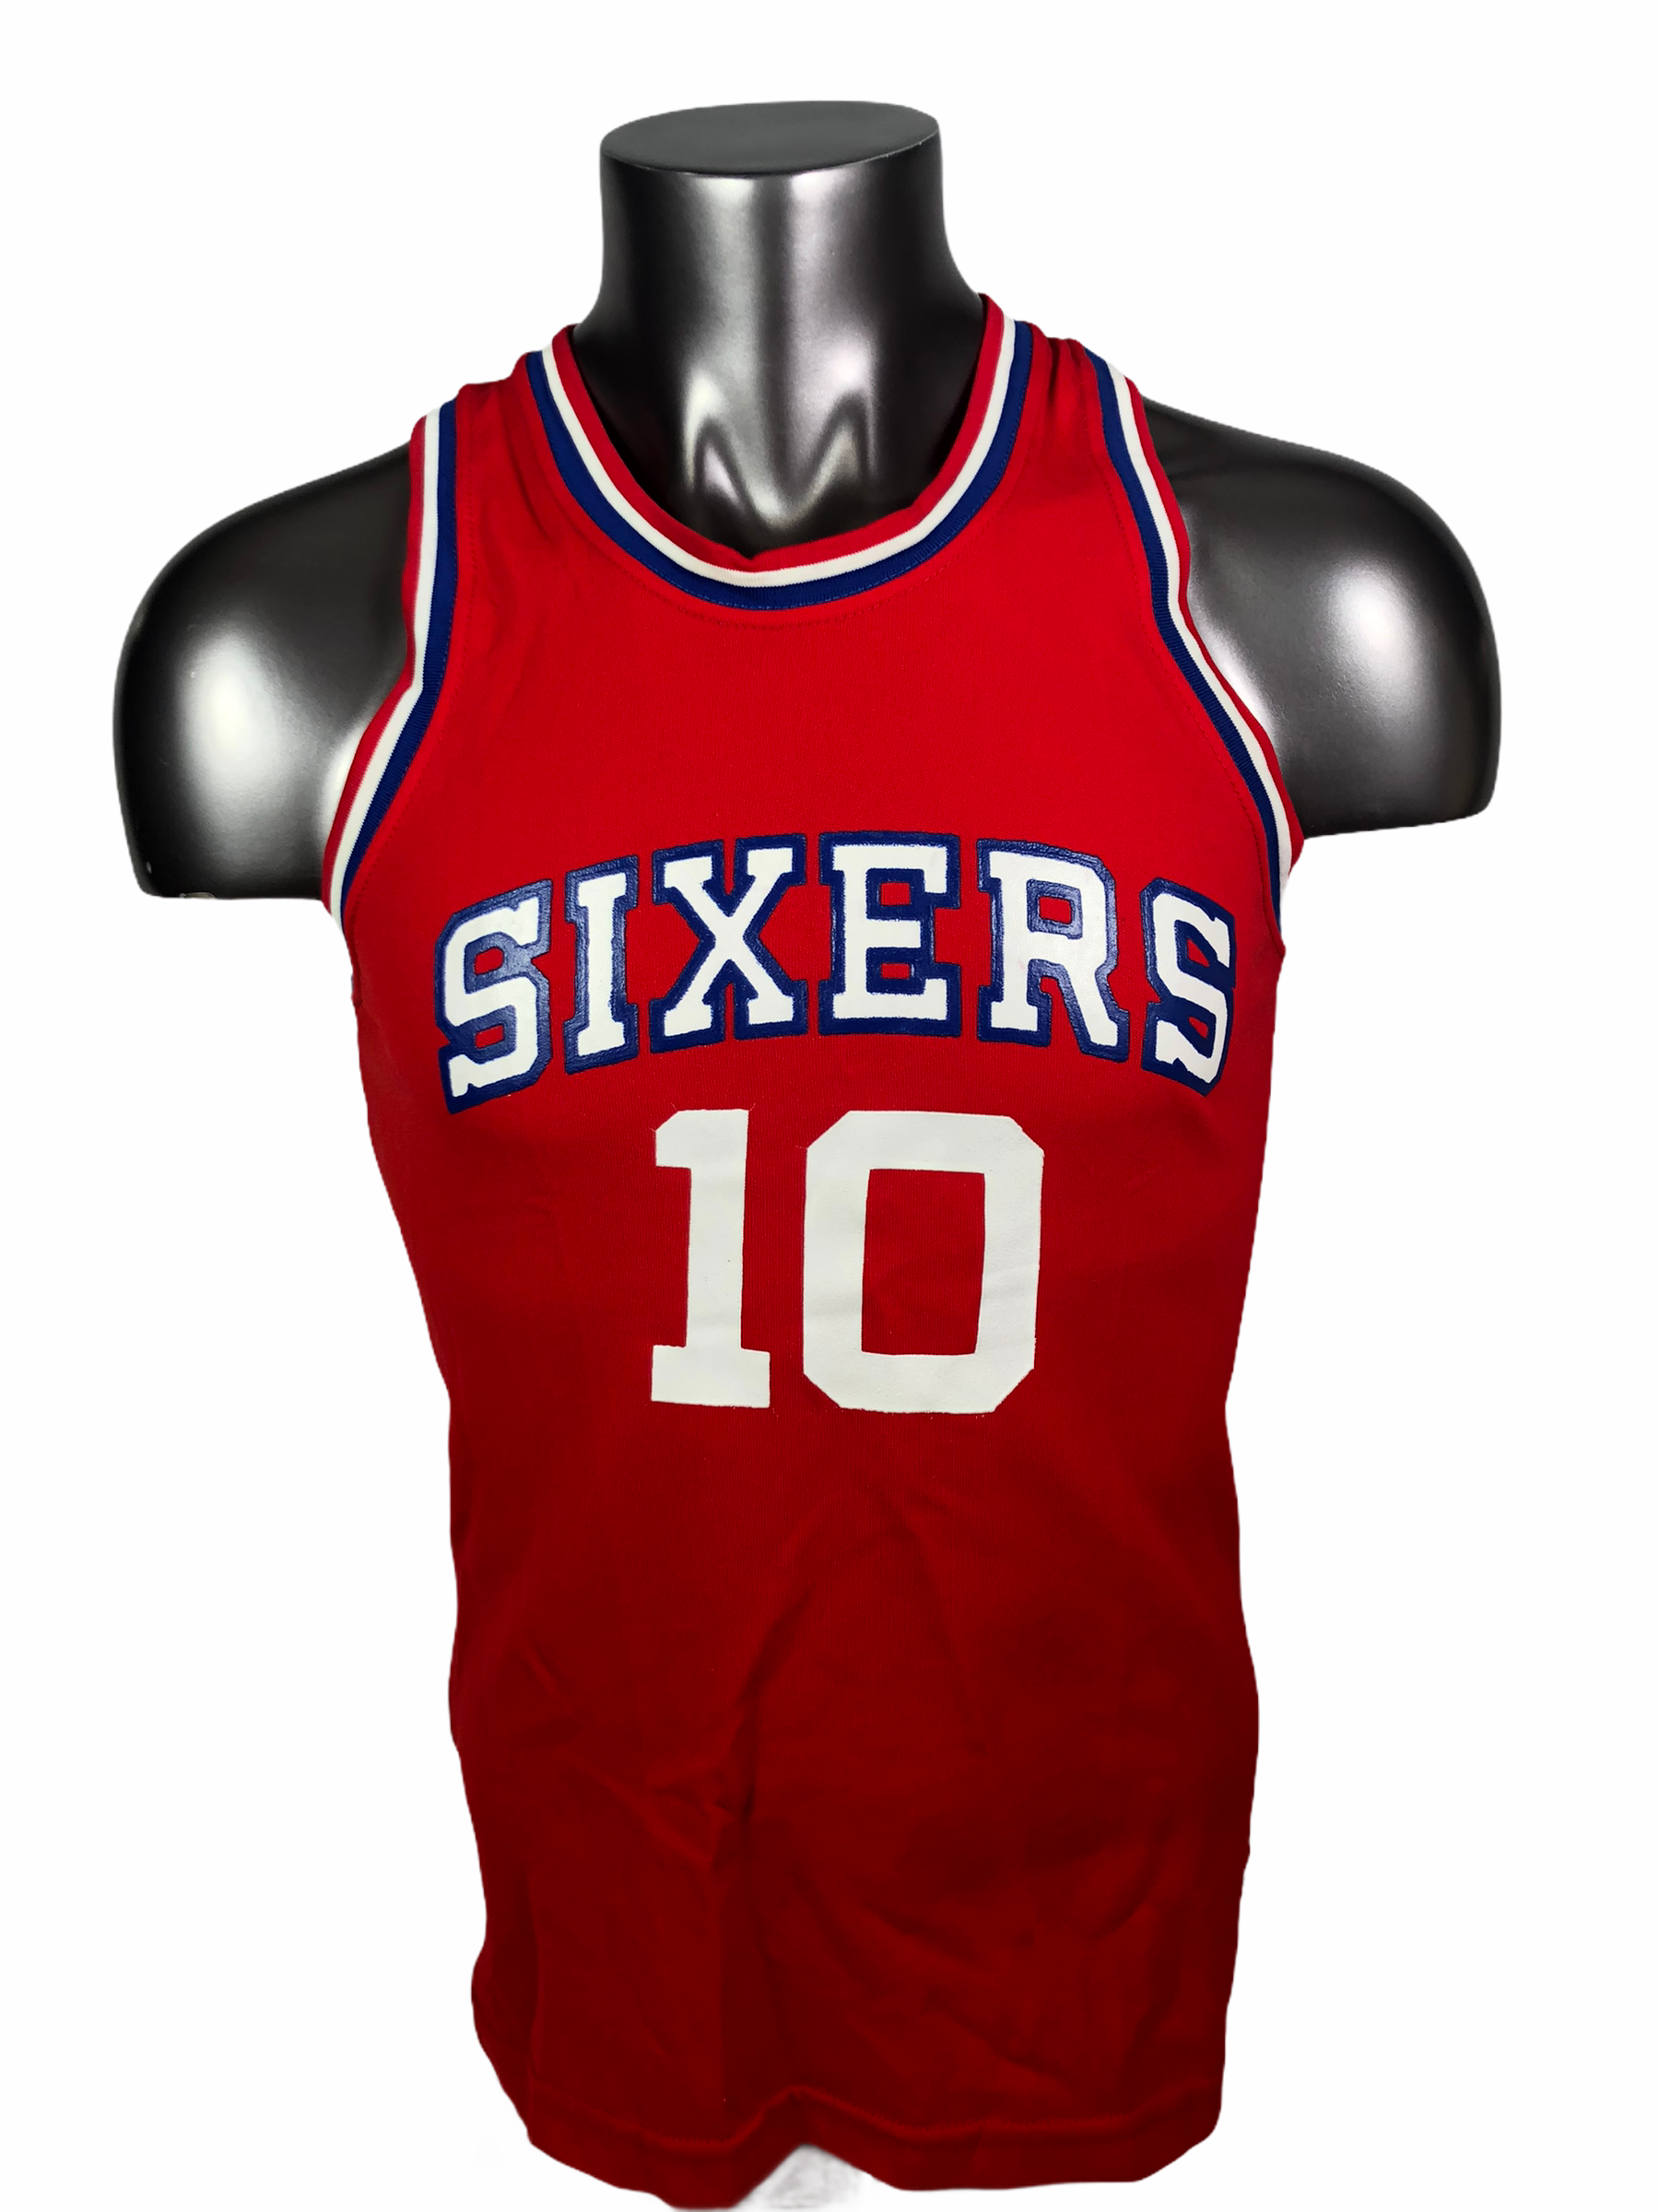 sixers basketball jersey